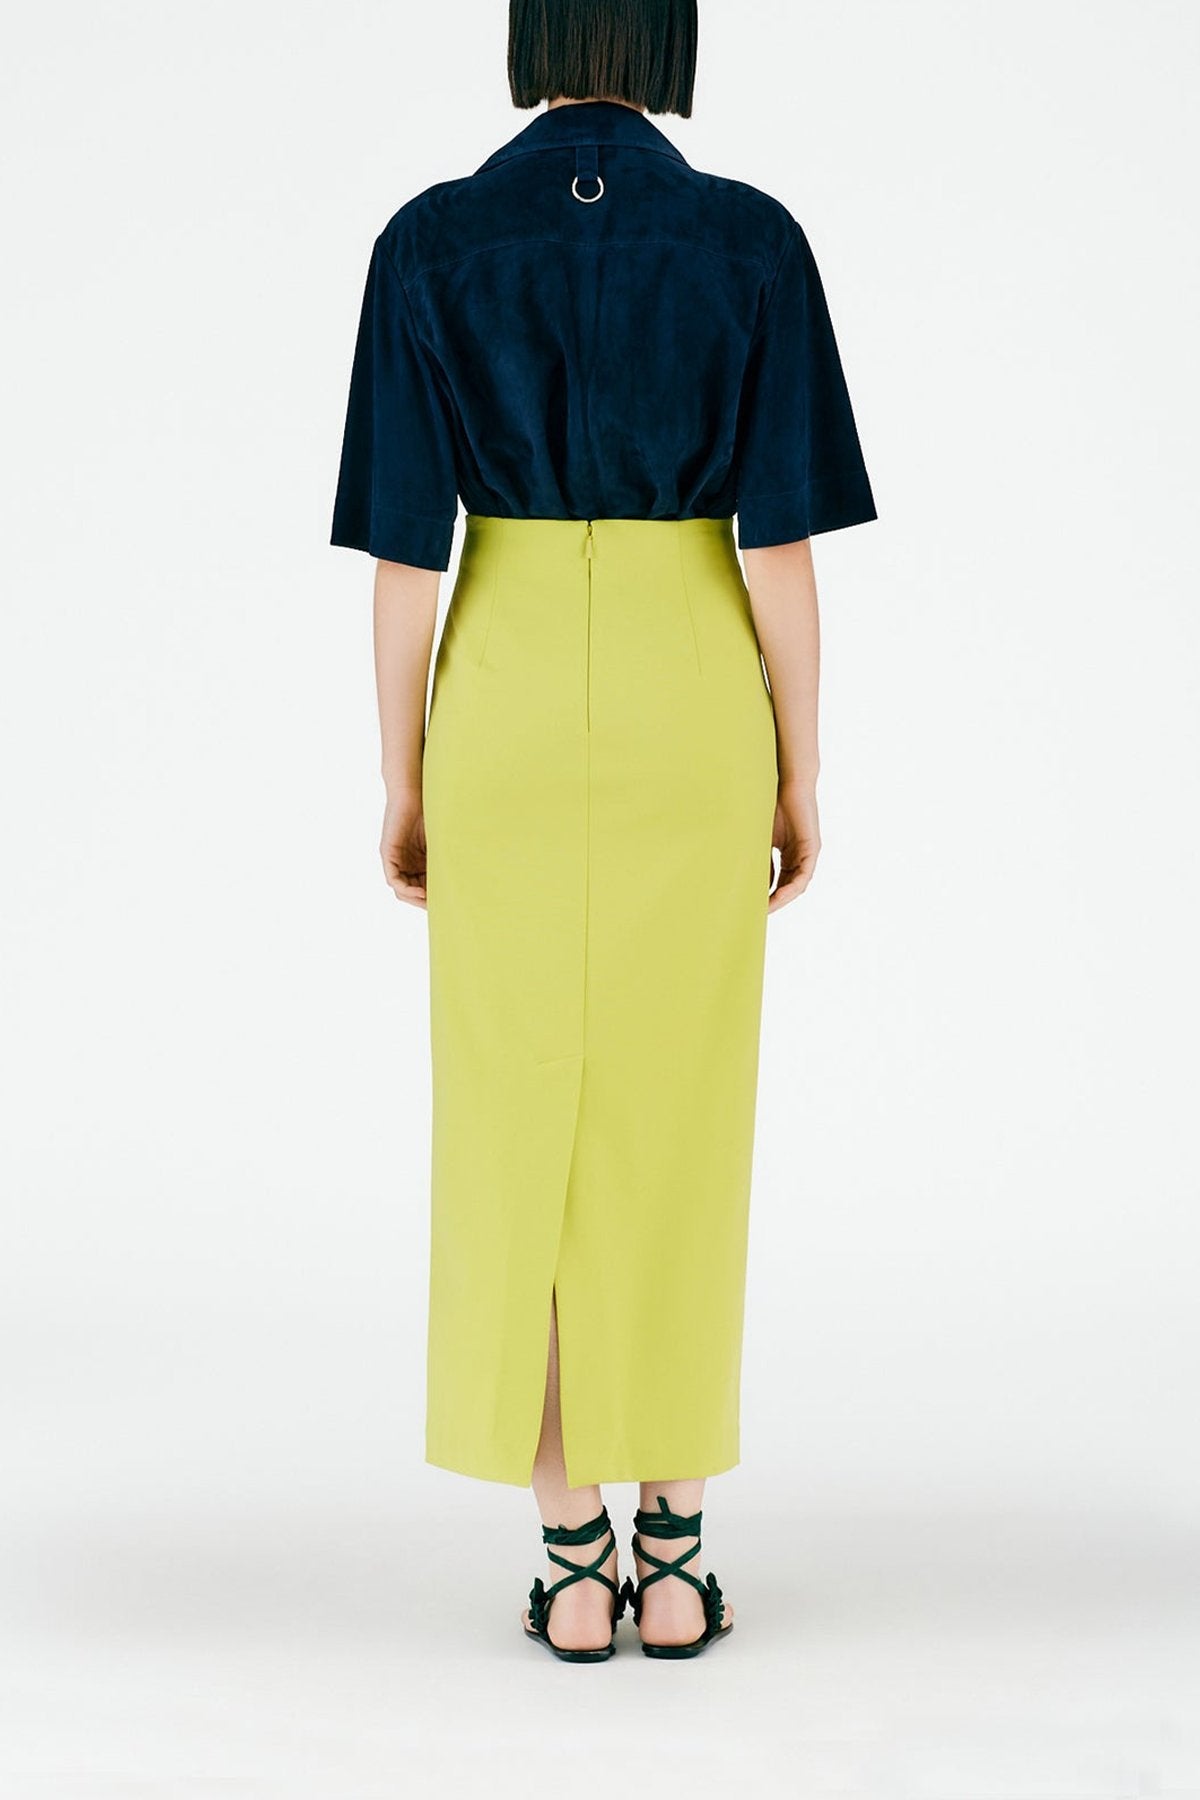 Tibi Structured Knit Pencil Skirt in Geko Green – Hampden Clothing